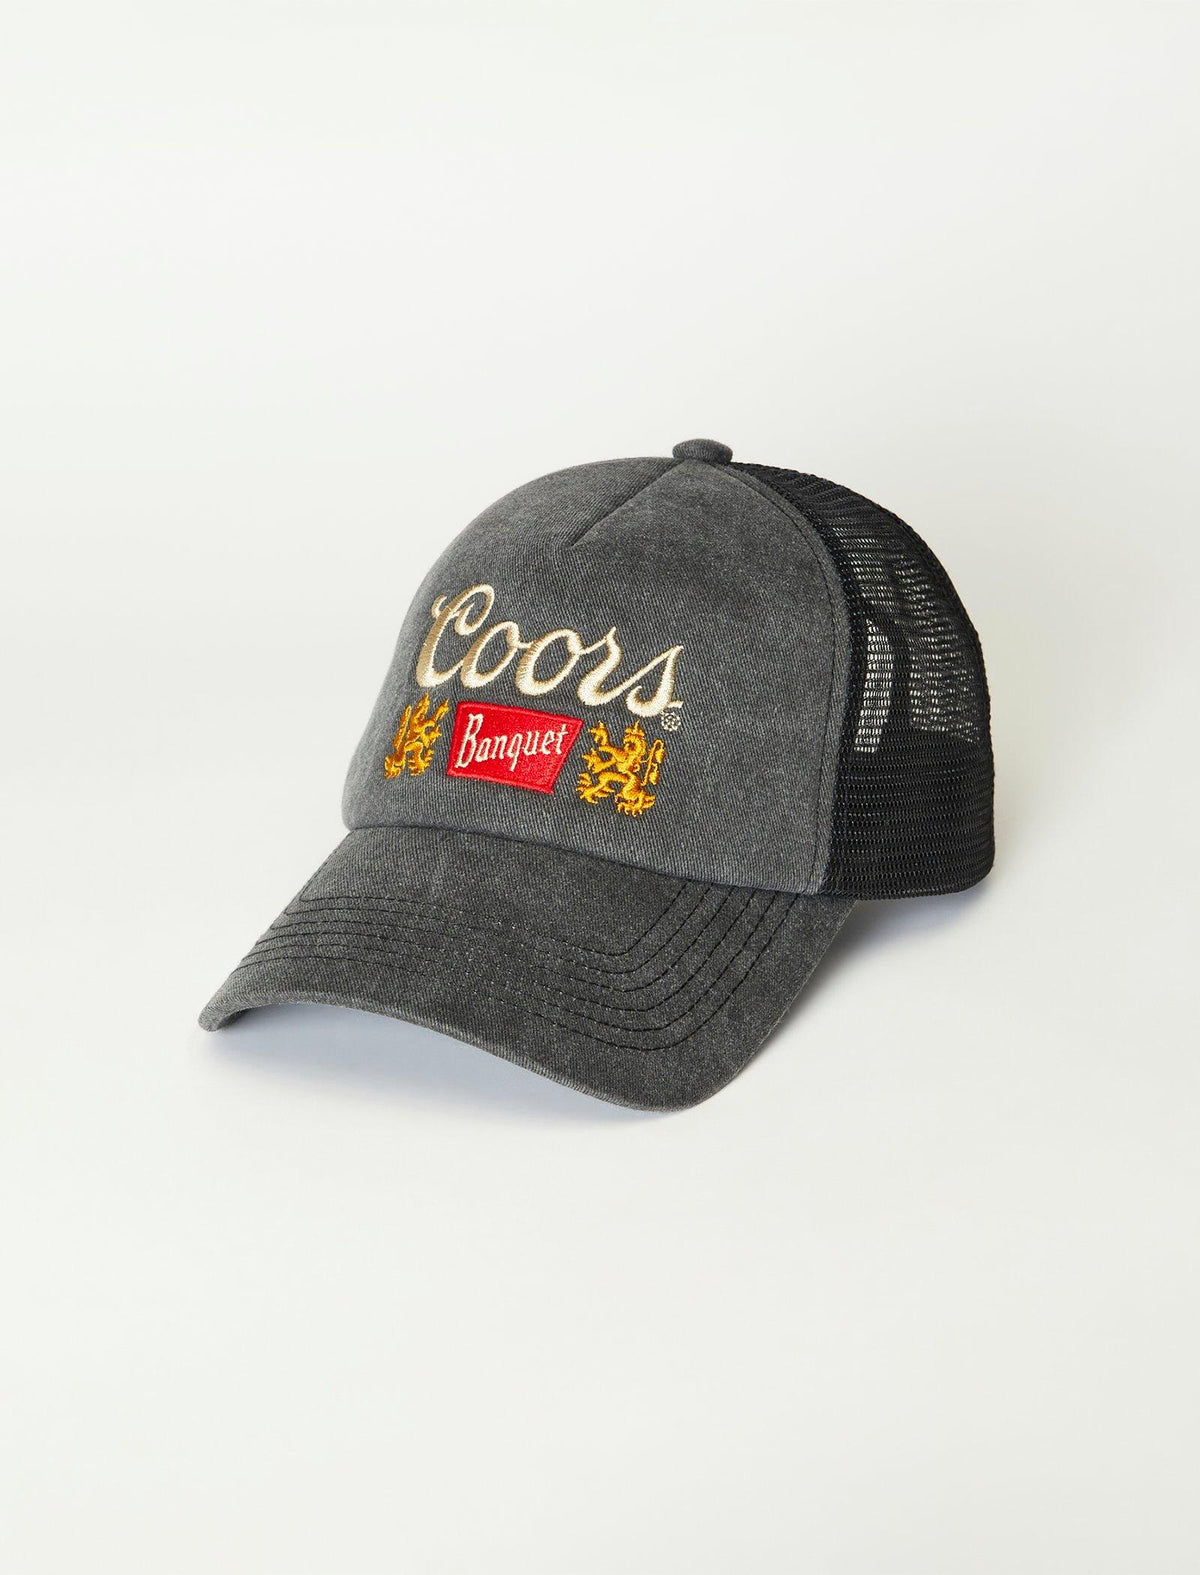 Lucky Brand Coors Trucker Hat - Men's Clothing Outerwear Jean Denim Jackets Black